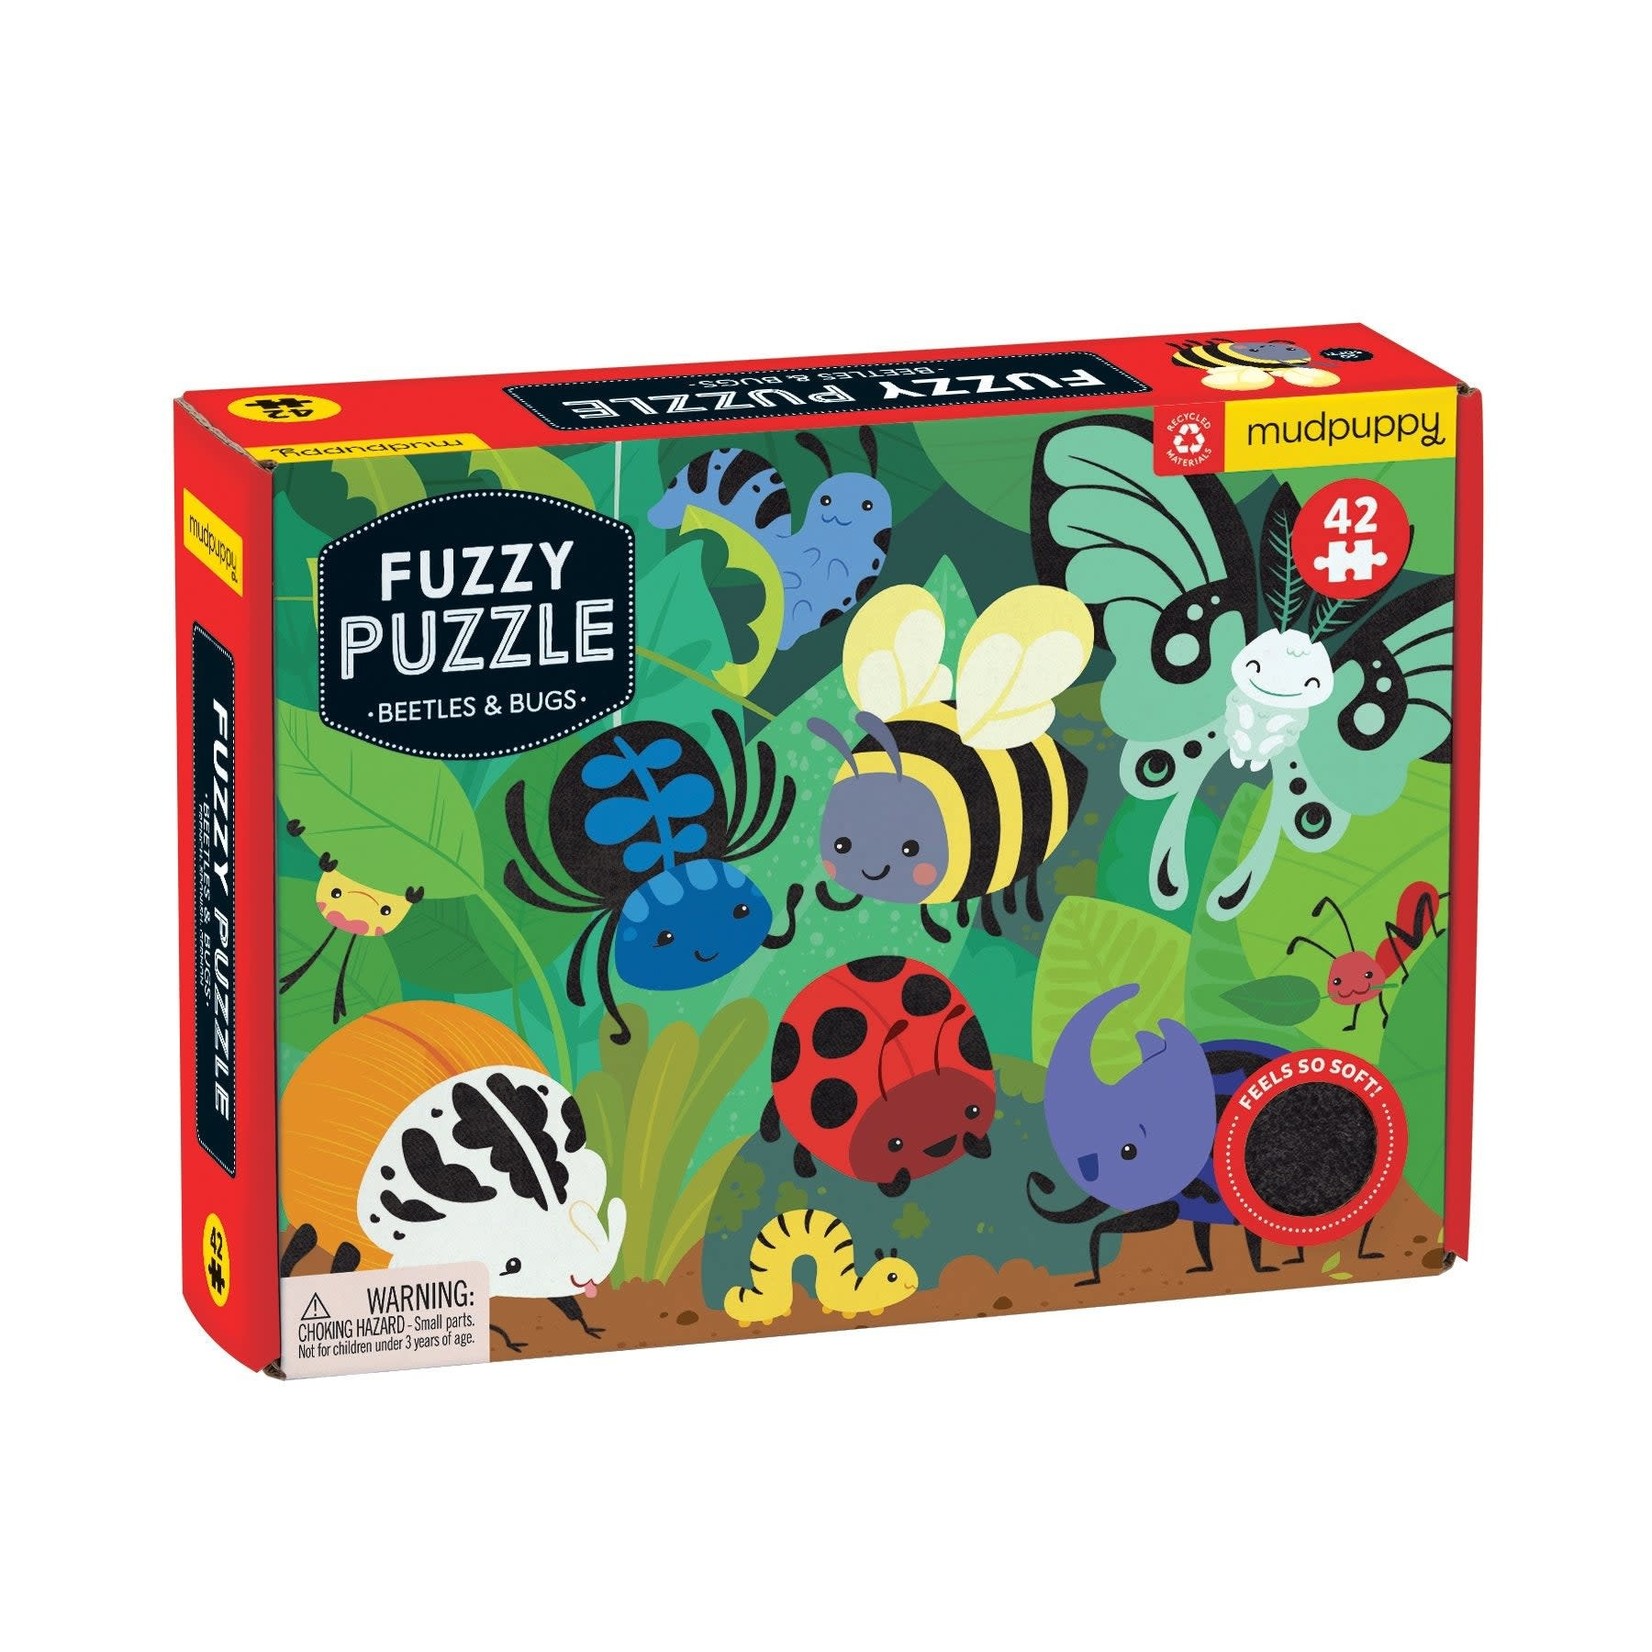 Mudpuppy Fuzzy Puzzle - Beetles & Bugs 42 Piece